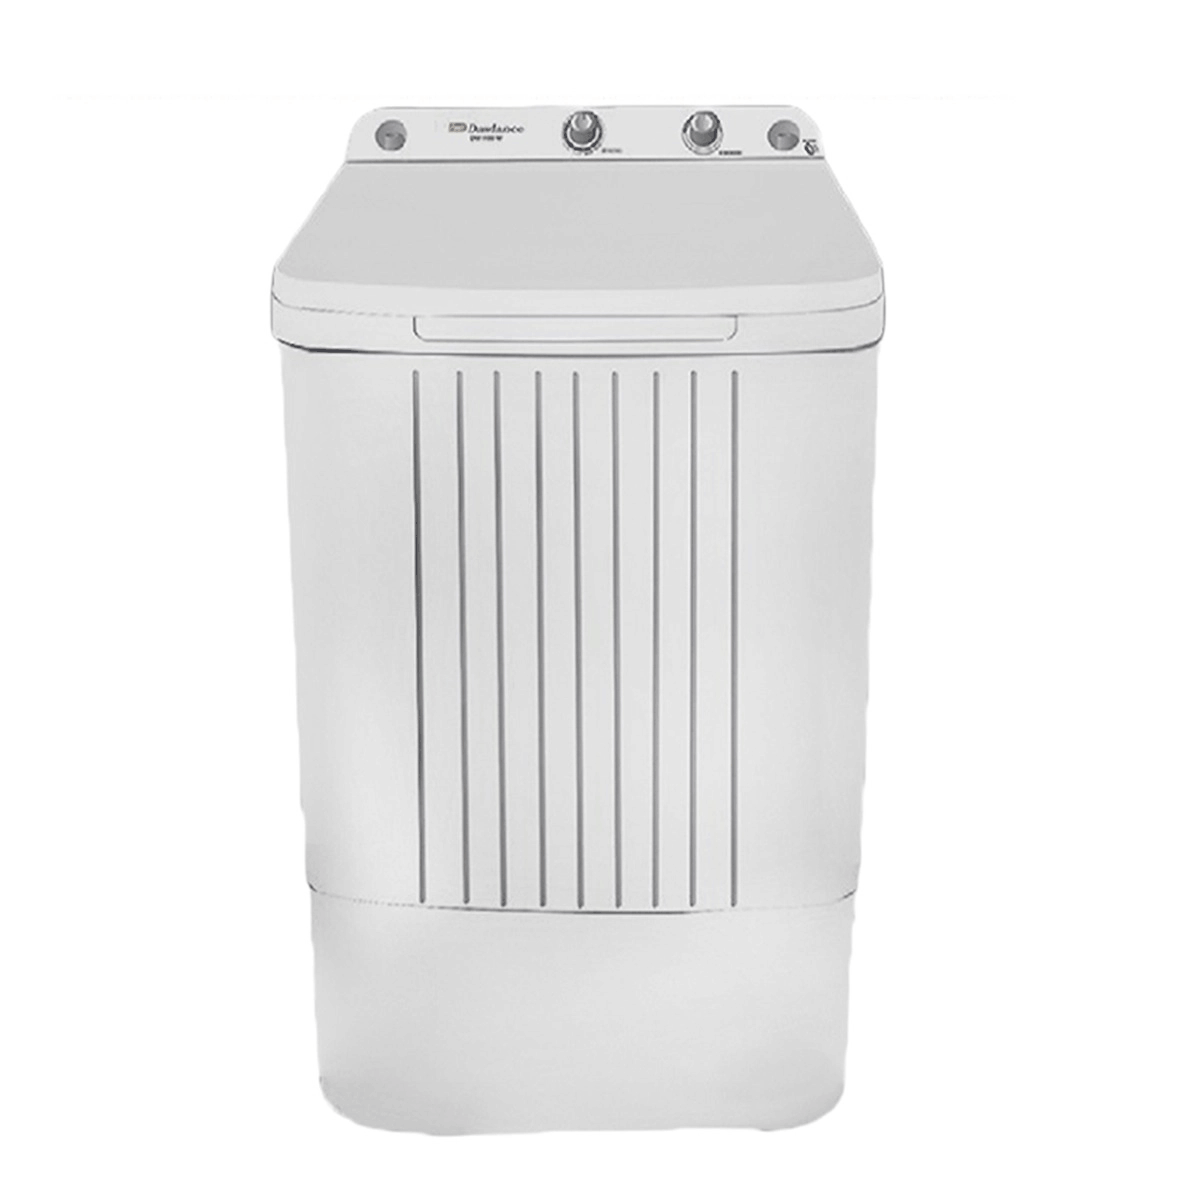 Dawlance Washing Machine Single Tub – DW-6100 White